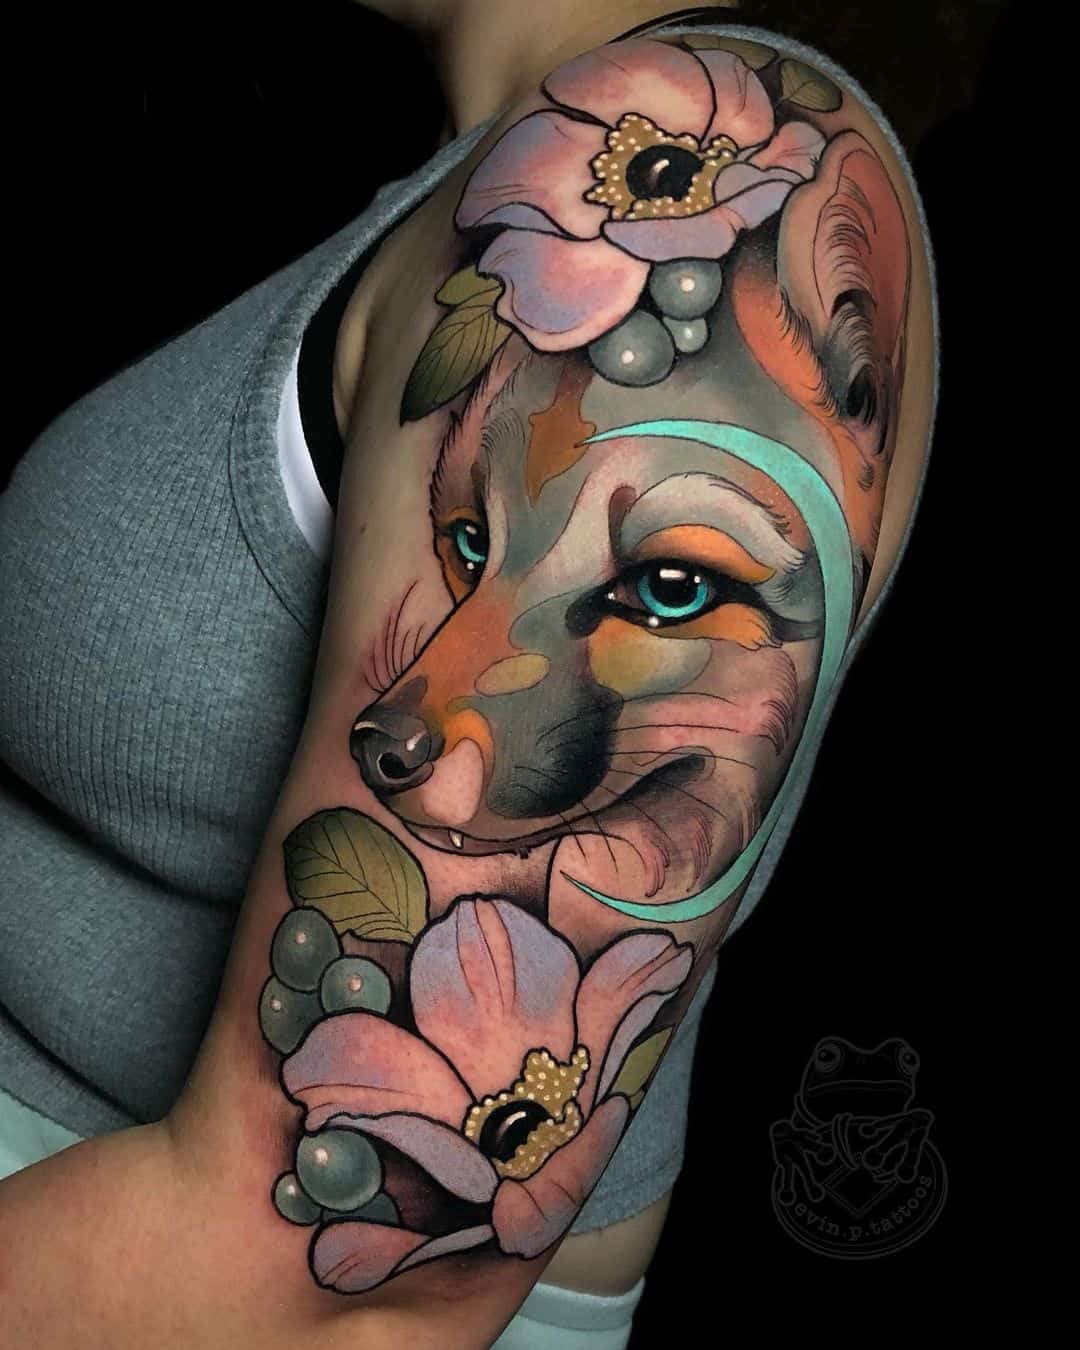 hengjiao 3 pieces large arm sleeve tattoo tiger skull owl waterproof  temporary tattoo sticker fox lion body art full fake all-match tattoo  (colour: WAM317) : Amazon.de: Beauty